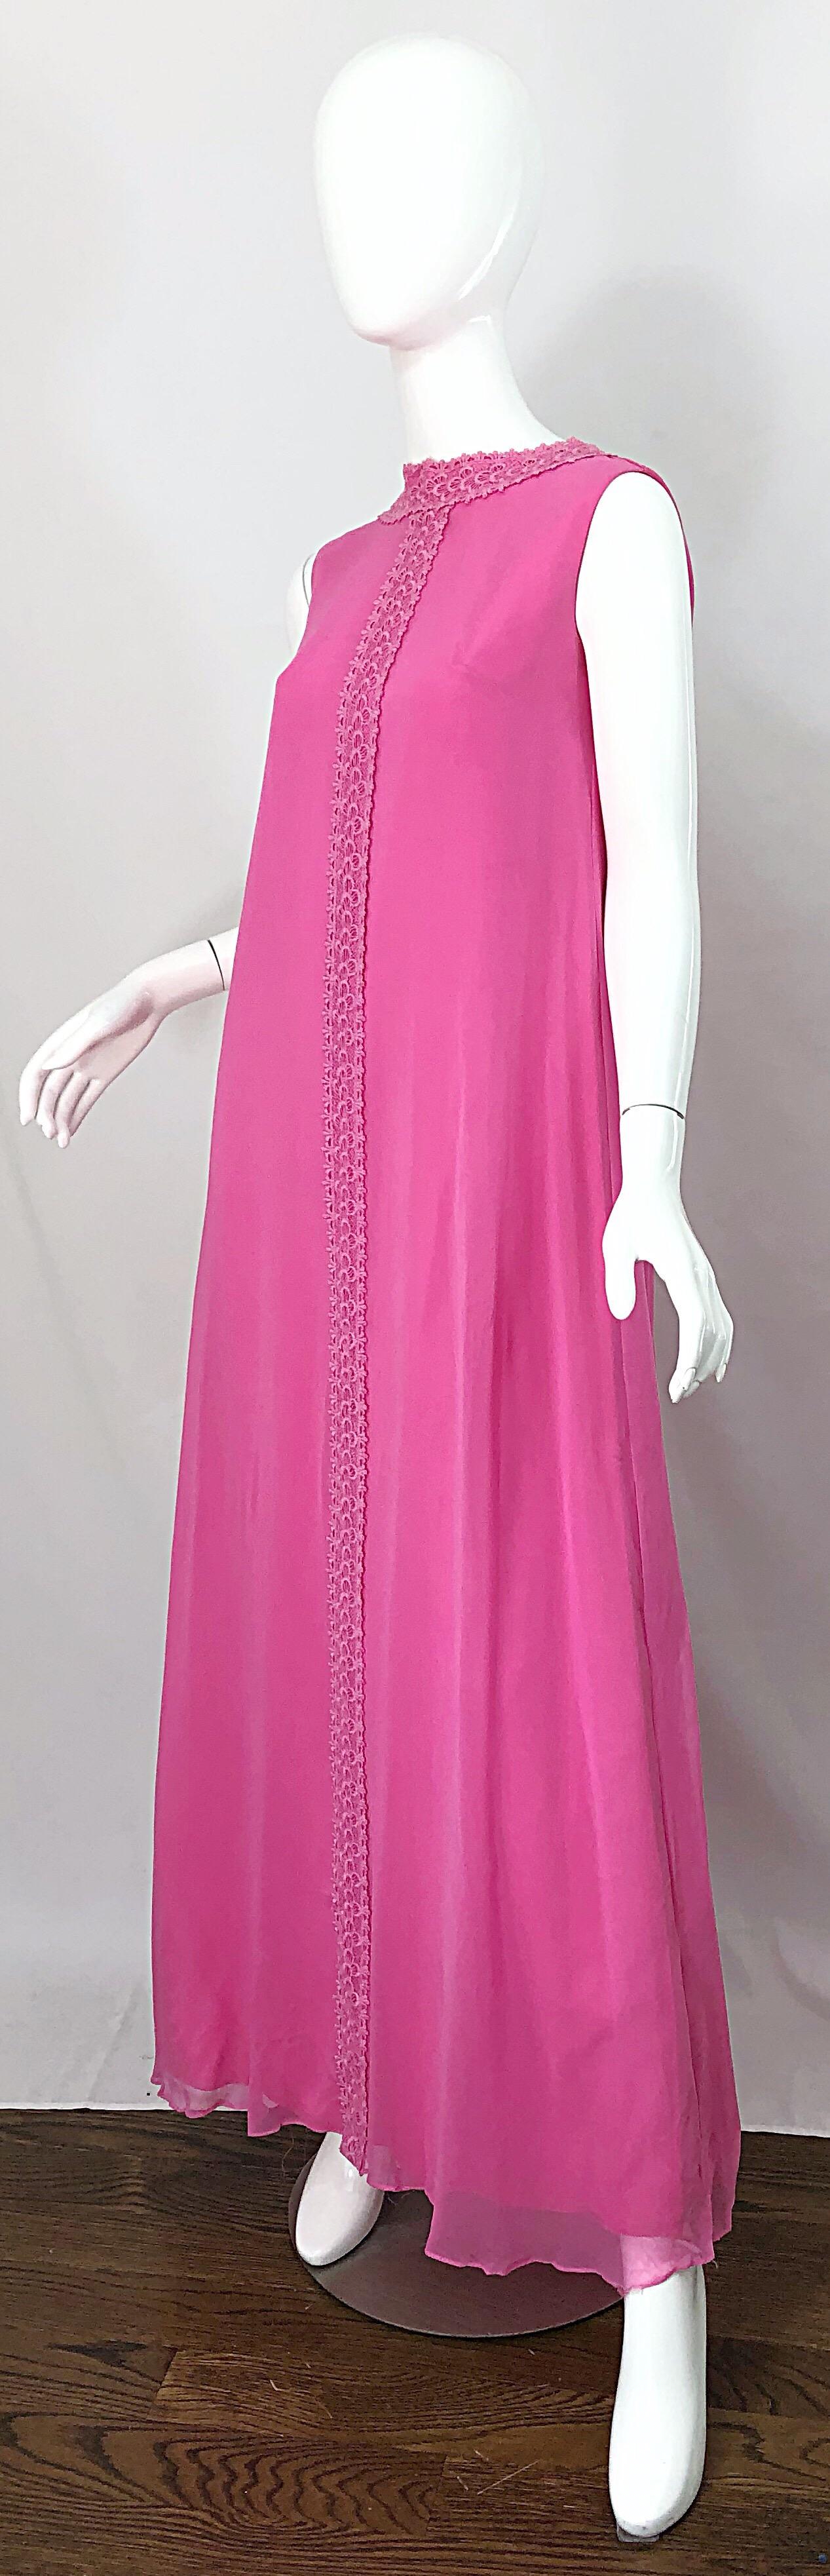 bubblegum pink dress